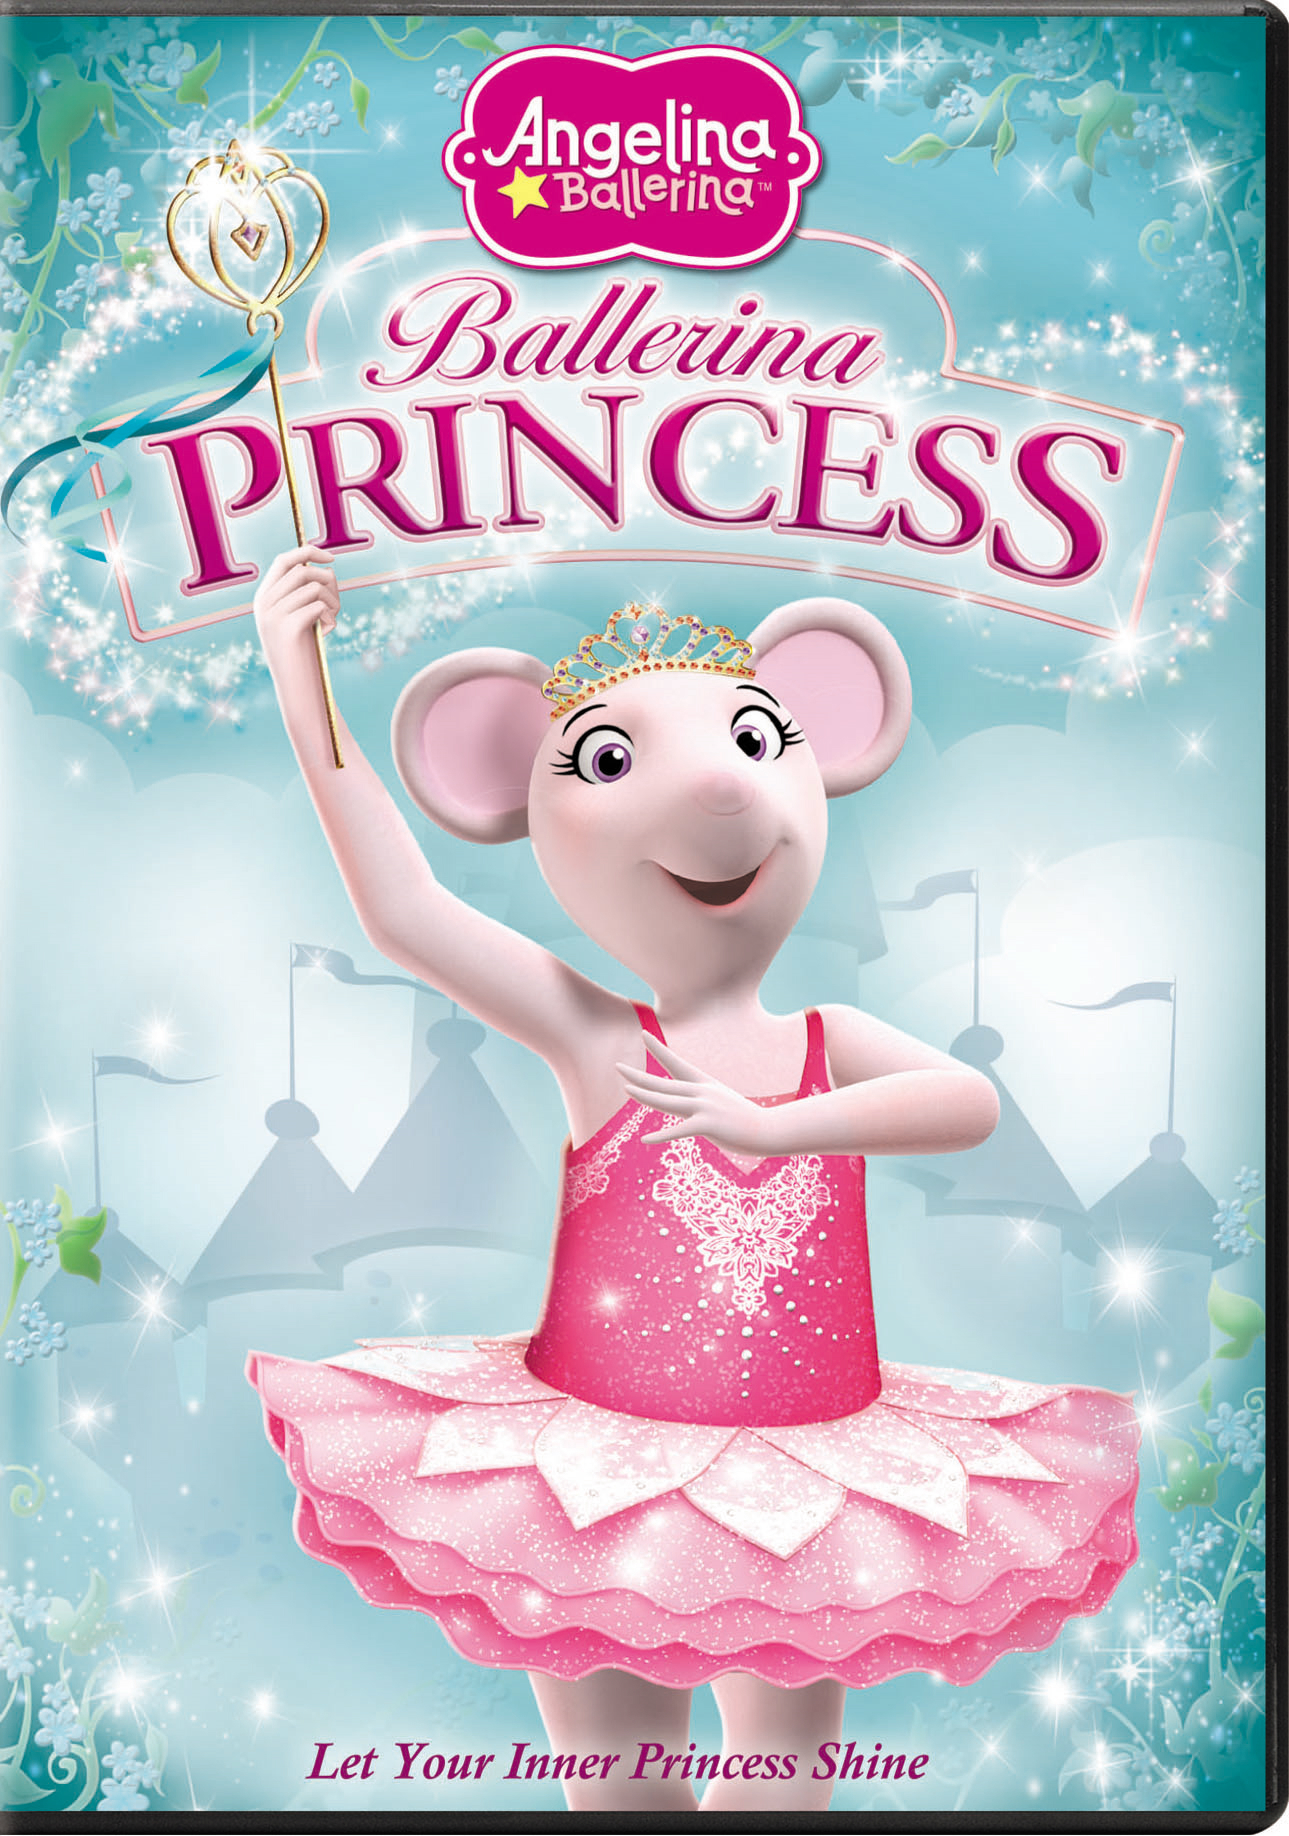 Angelina Ballerina: Ballerina Princess - DVD [ 2012 ]  - Children Movies On DVD - Movies On GRUV